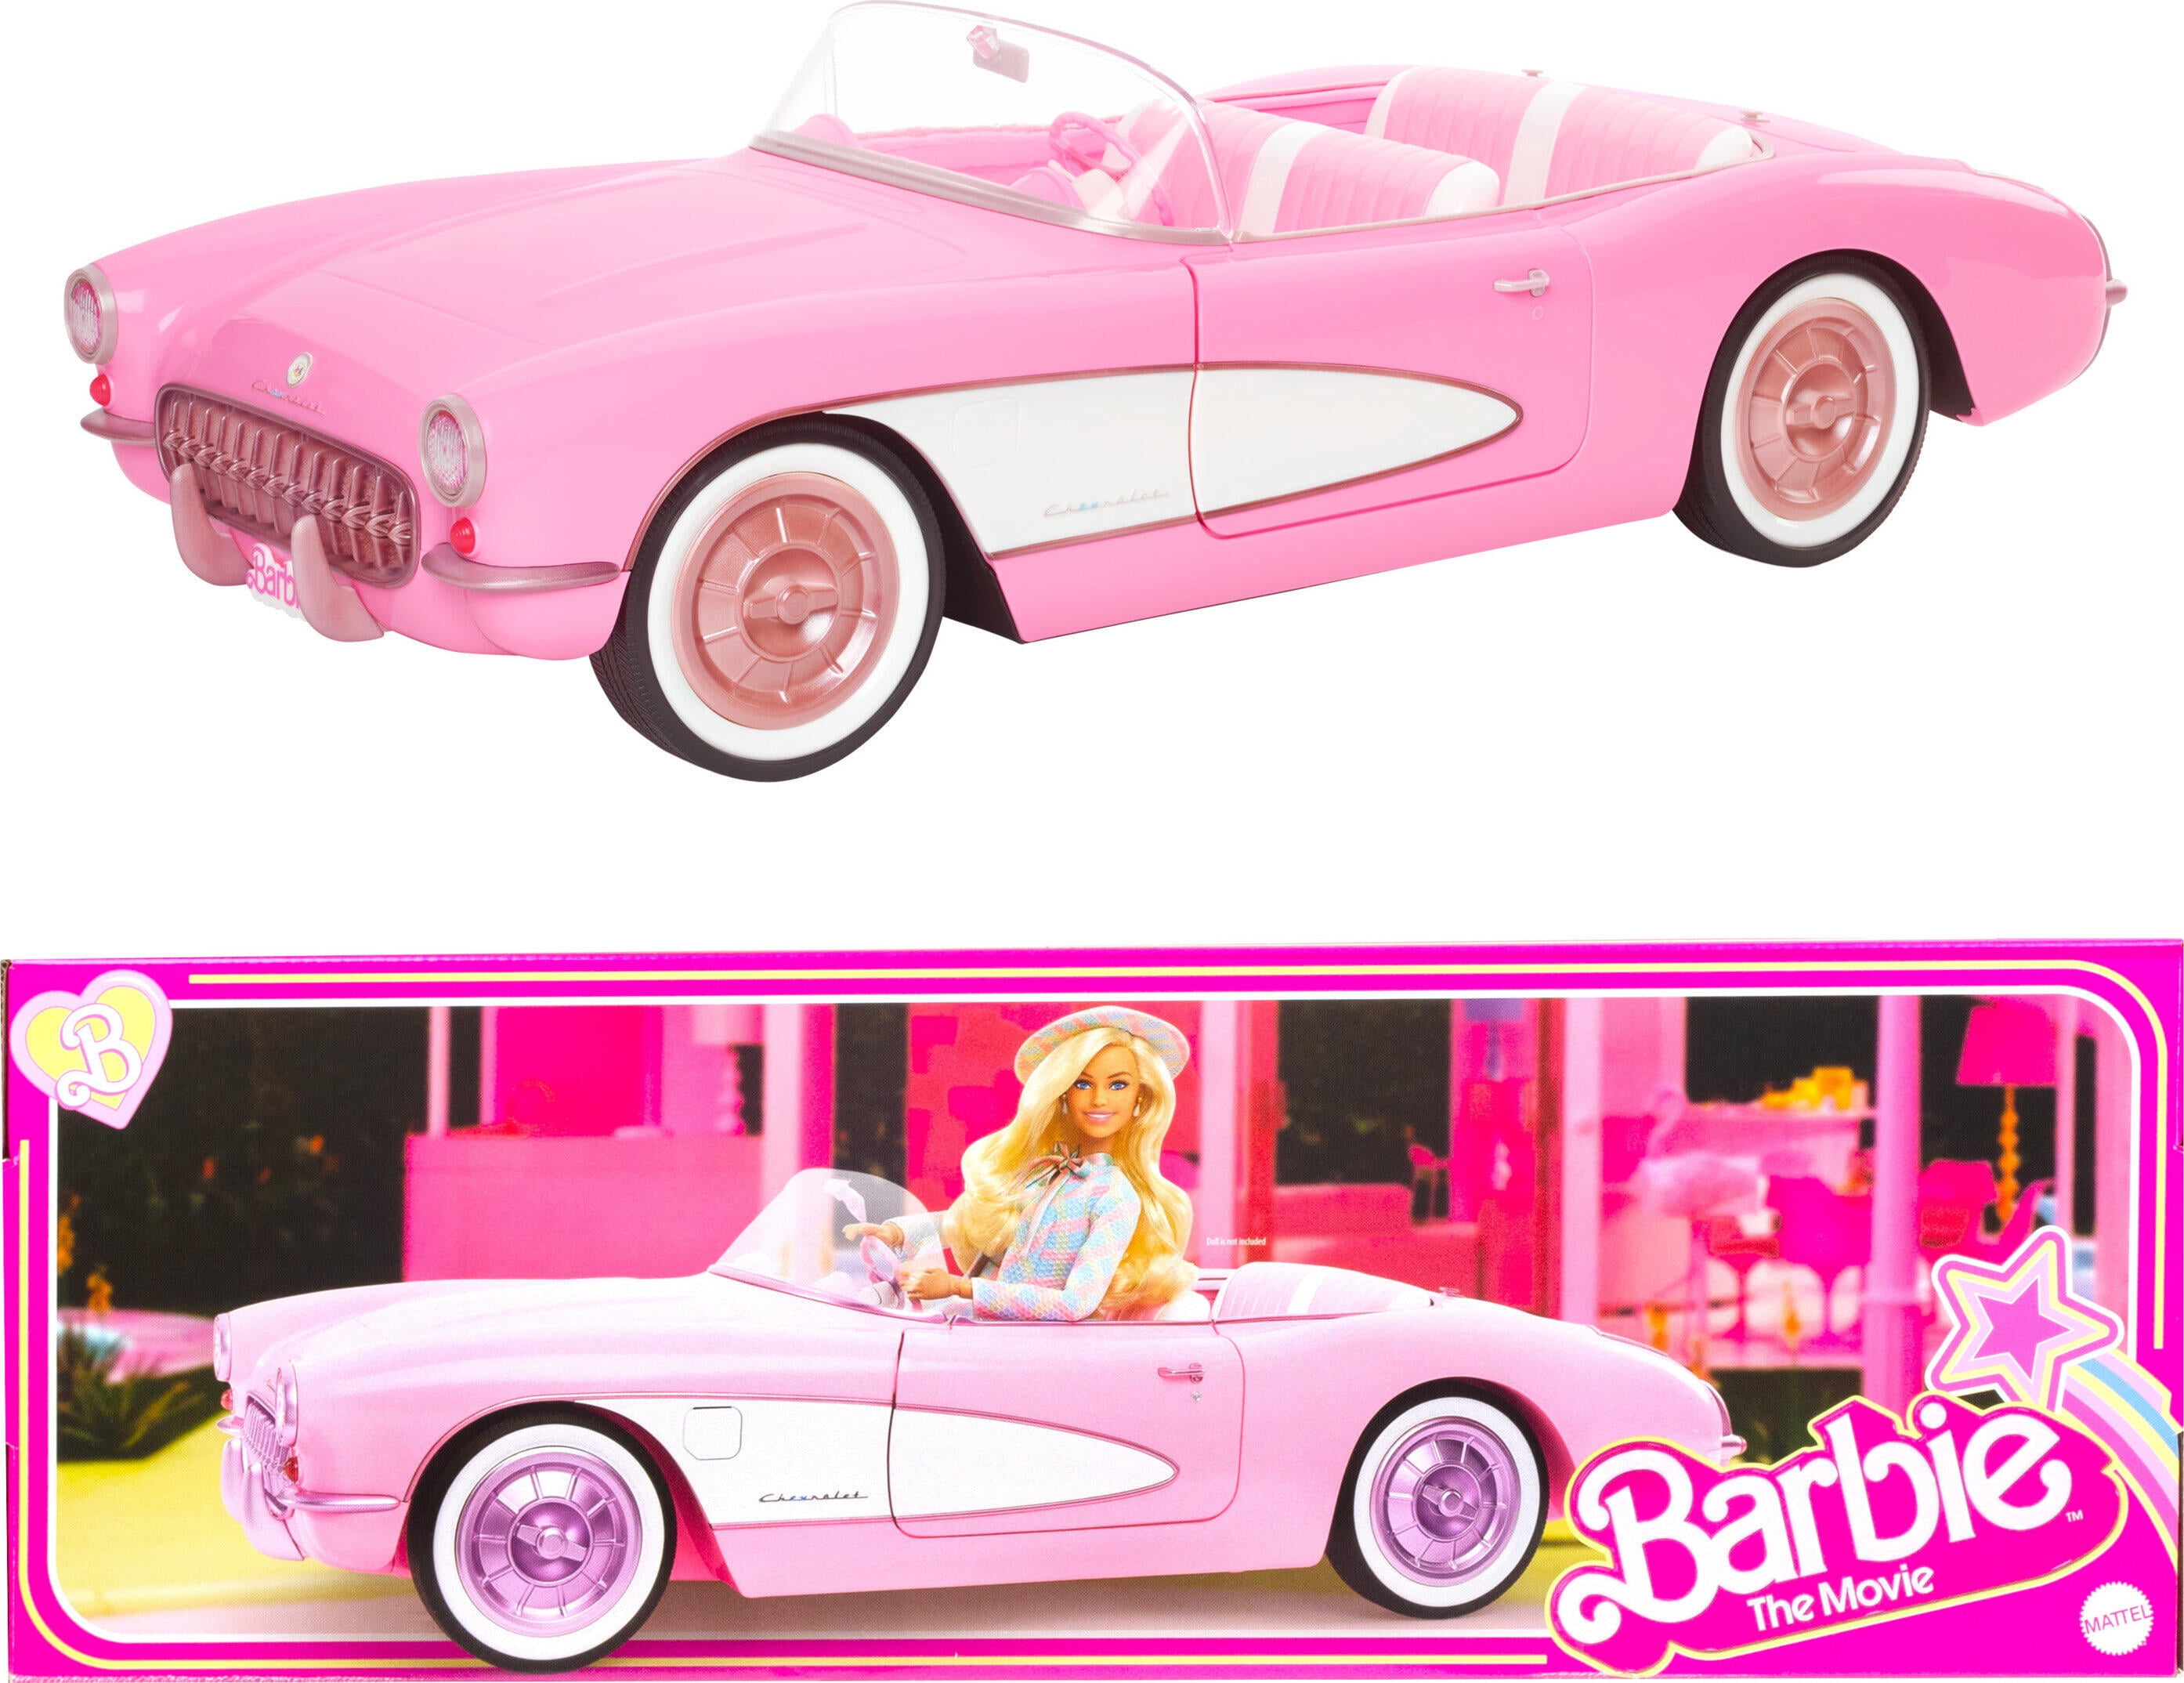 Barbie Movie Car, Pink Corvette Convertible - Walmart.com